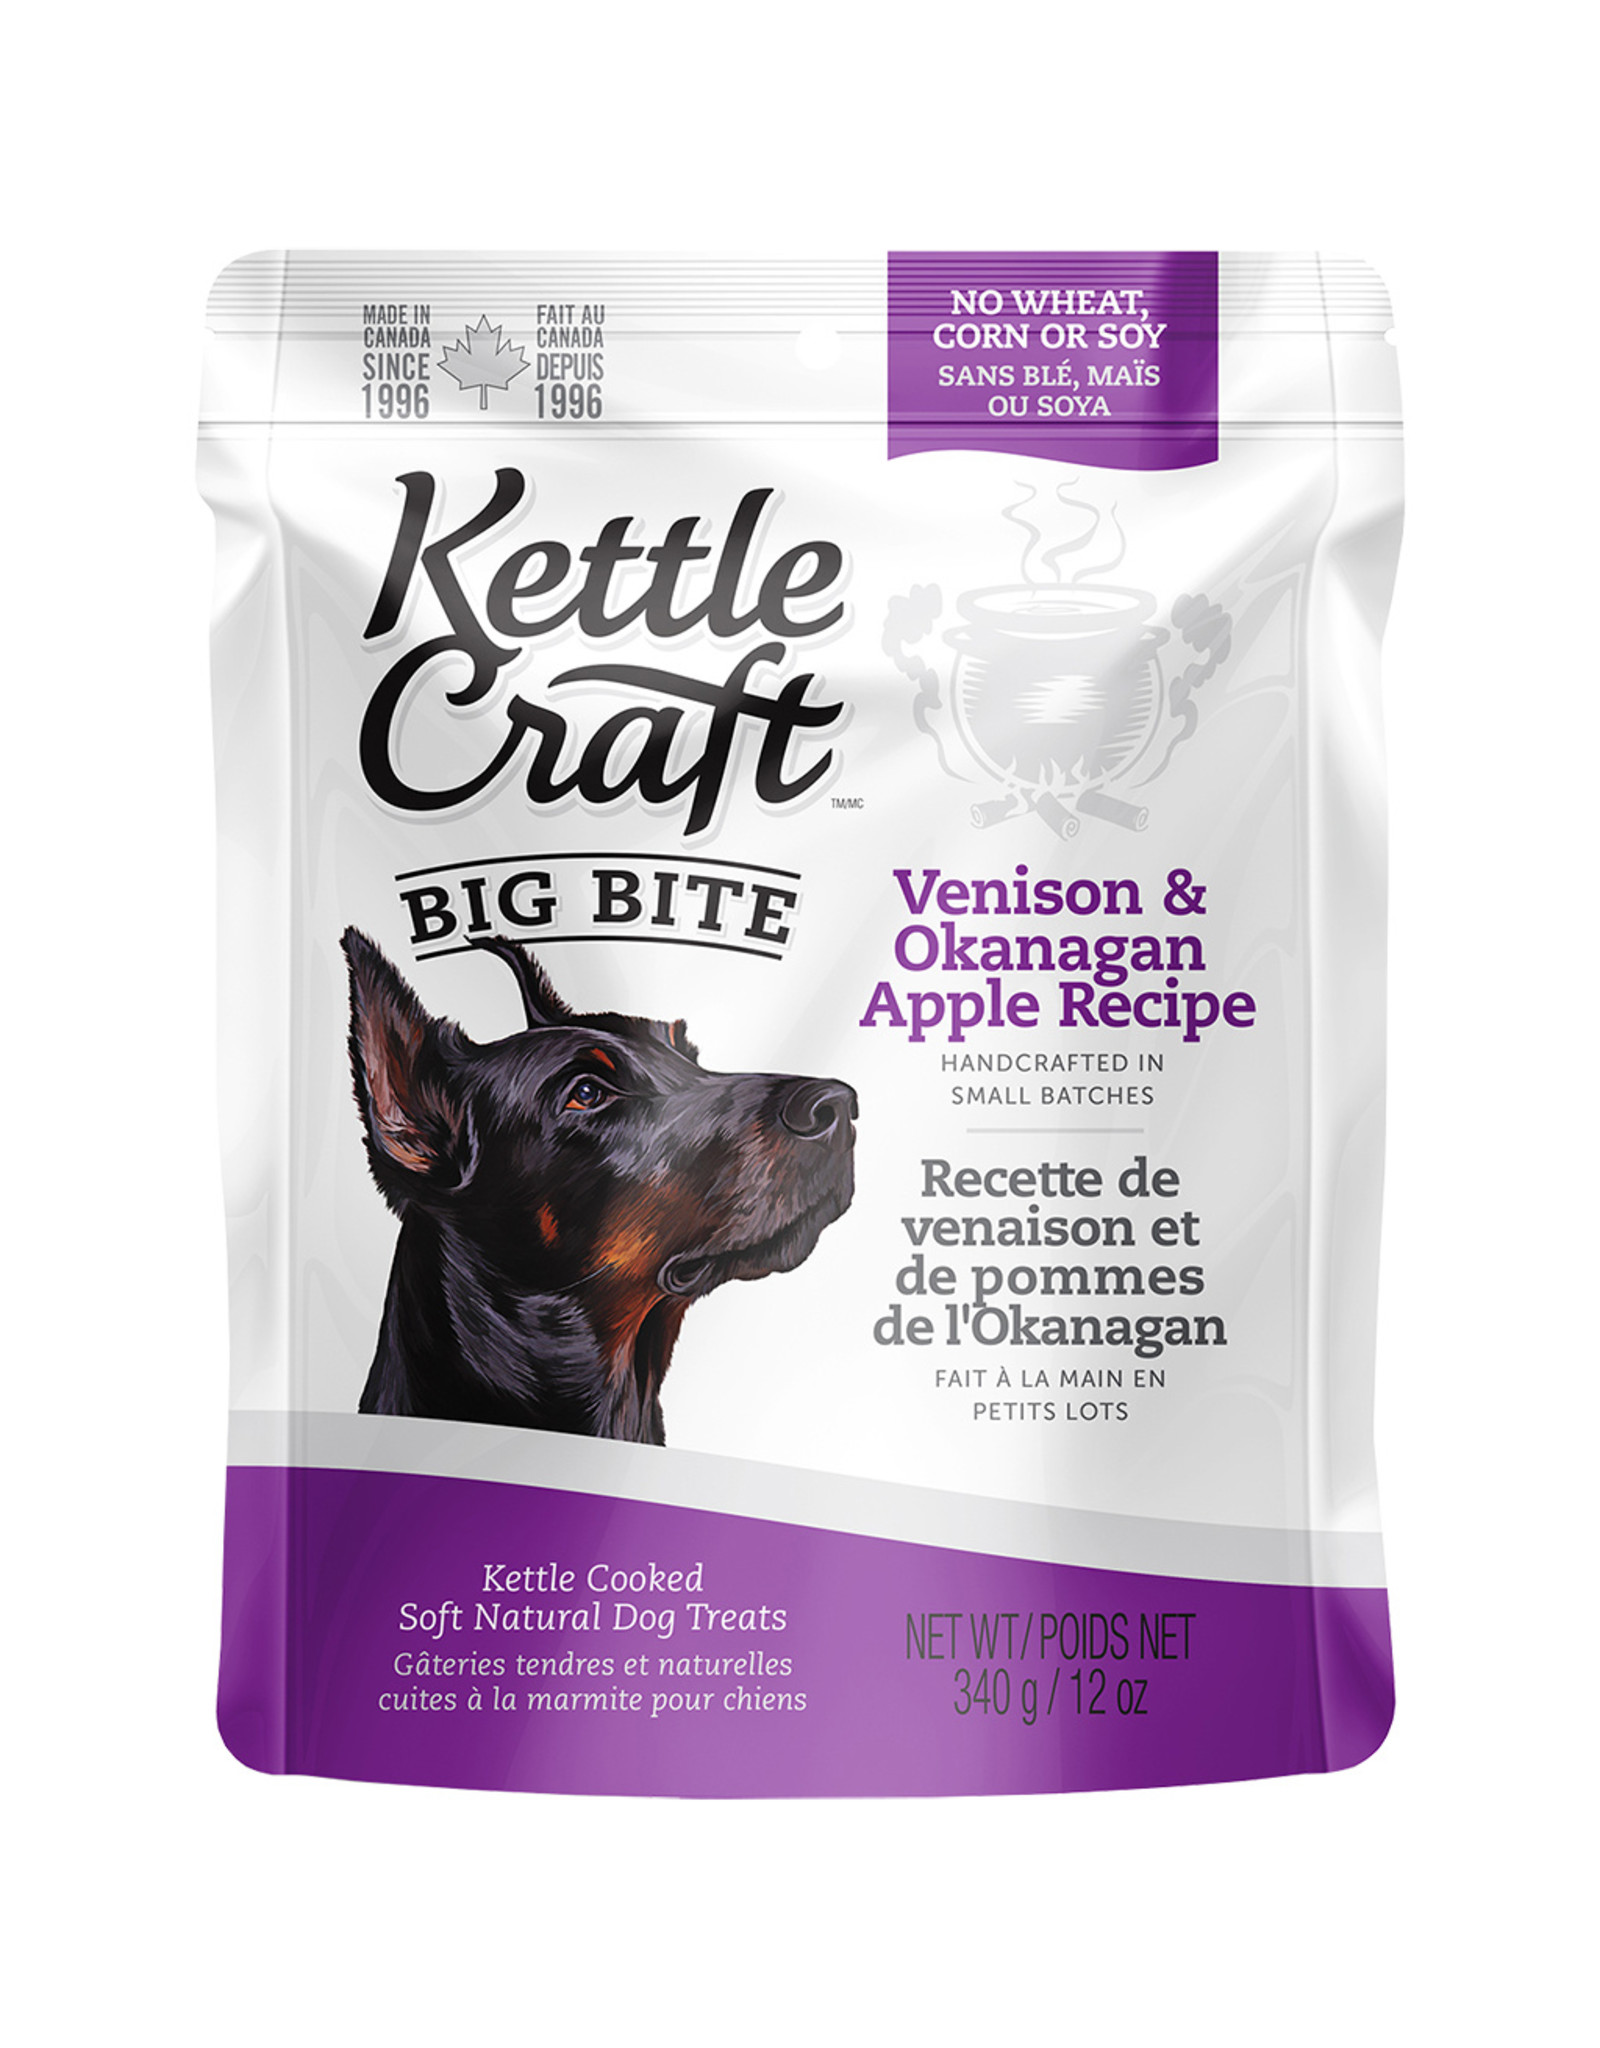 Kettle Craft Venison & Okanagan Apple